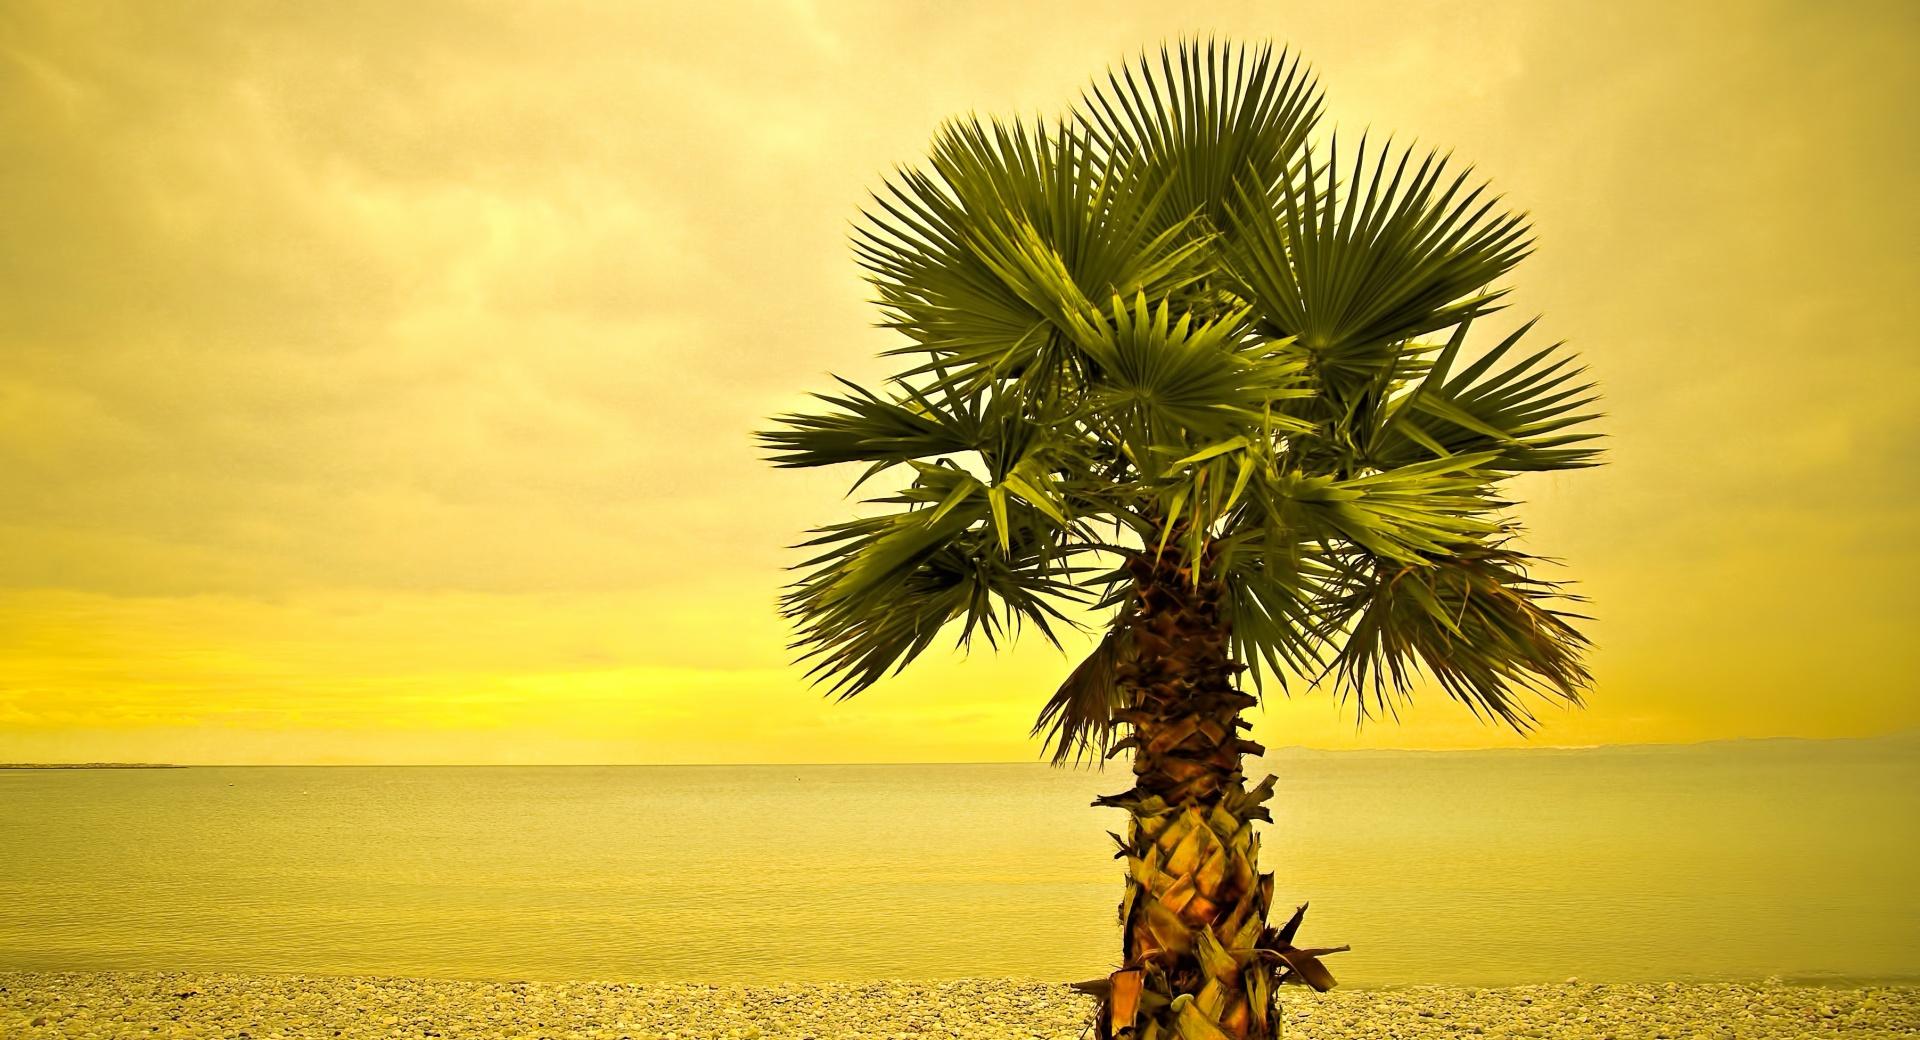 Beach Palm Tree wallpapers HD quality